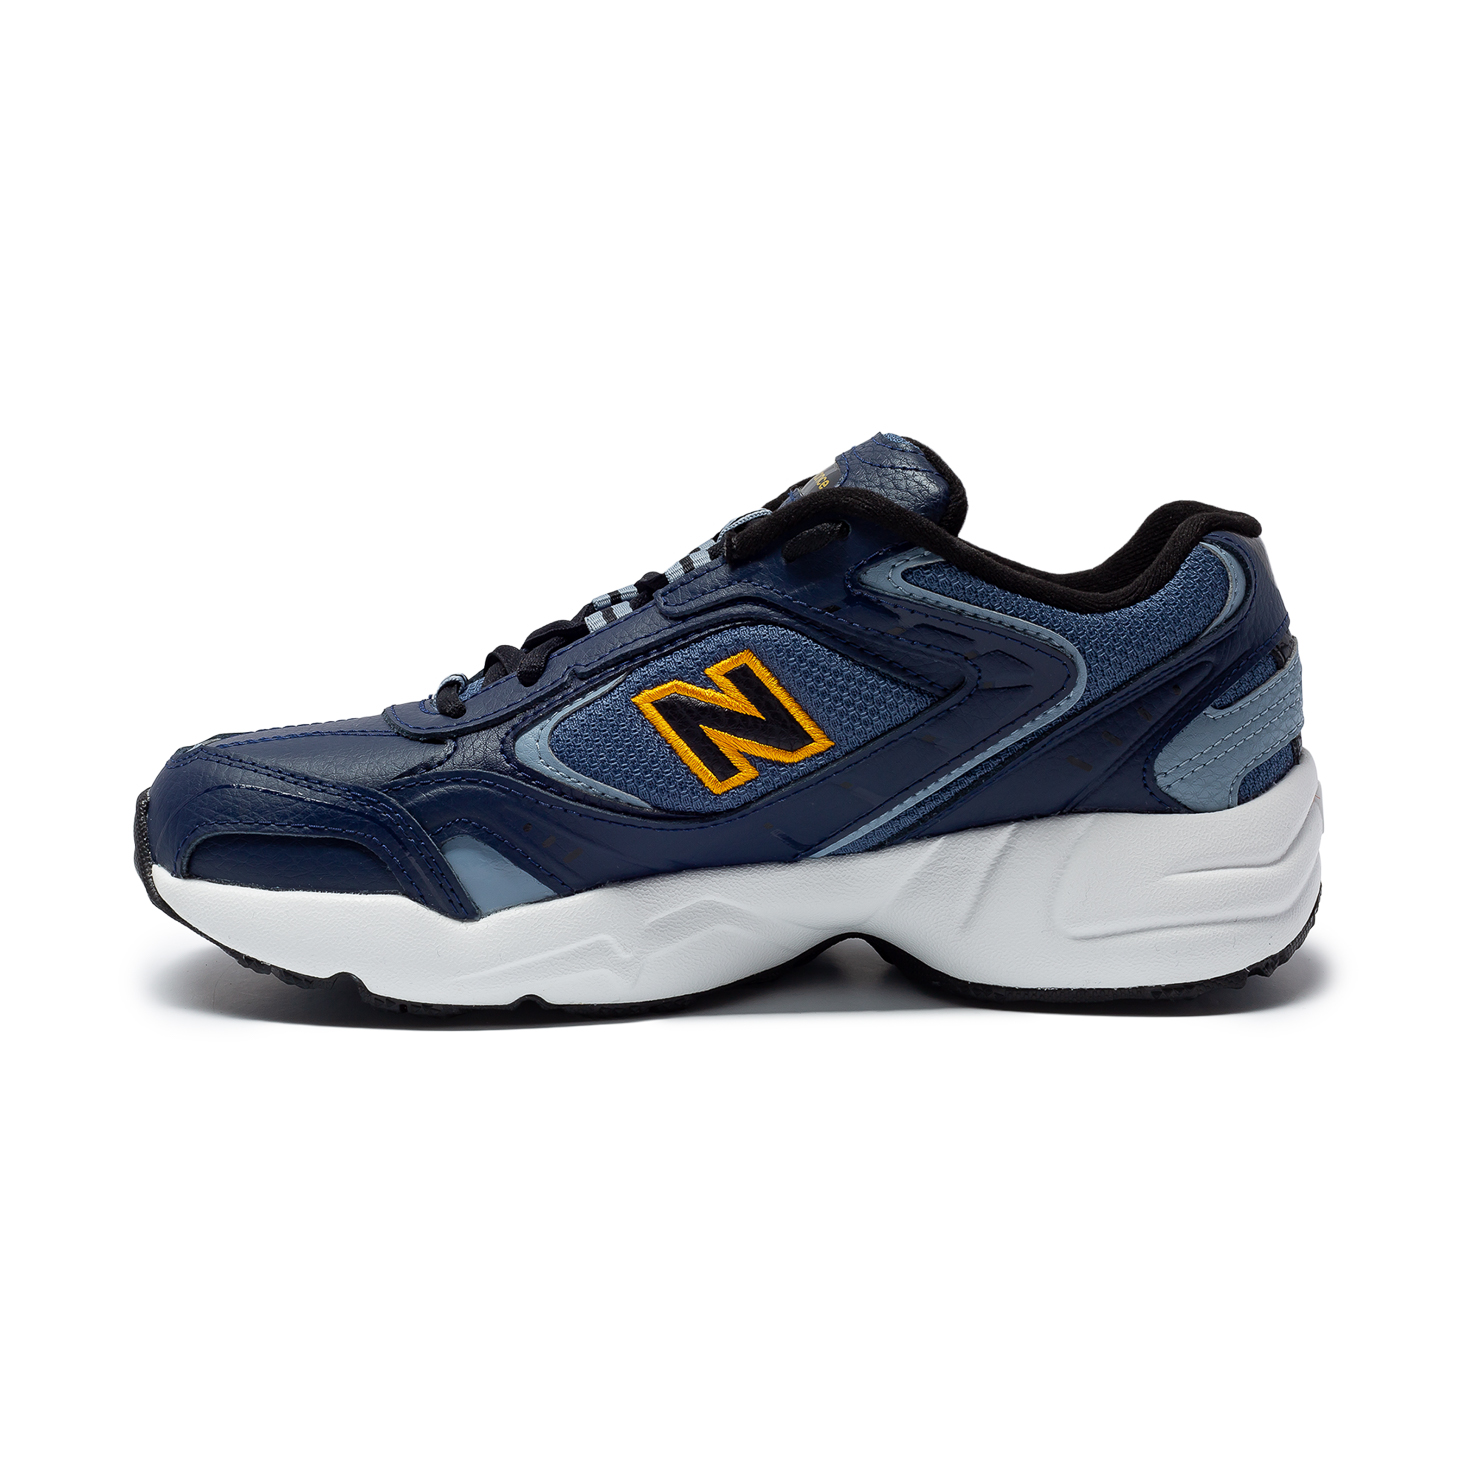 452 New Balance, размер 38, цвет синий NBWX452 - фото 6